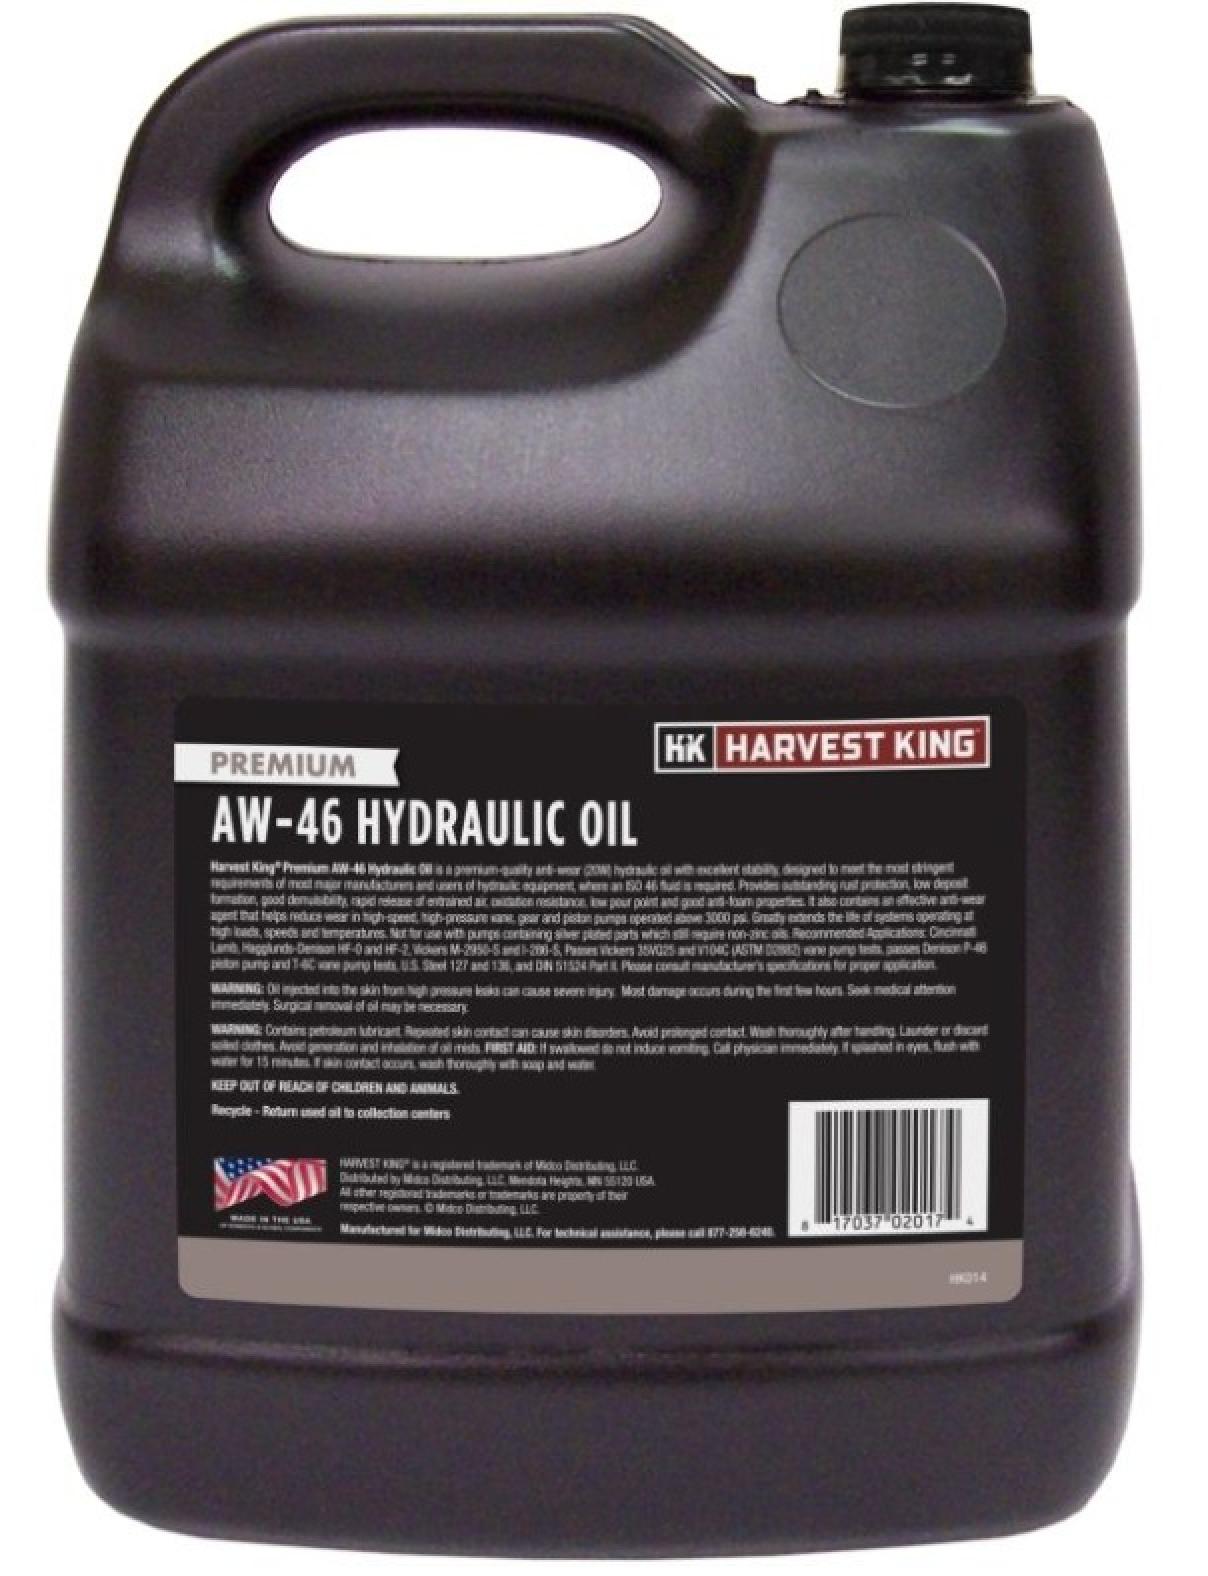 Harvest King Premium AW-46 Hydraulic Oil